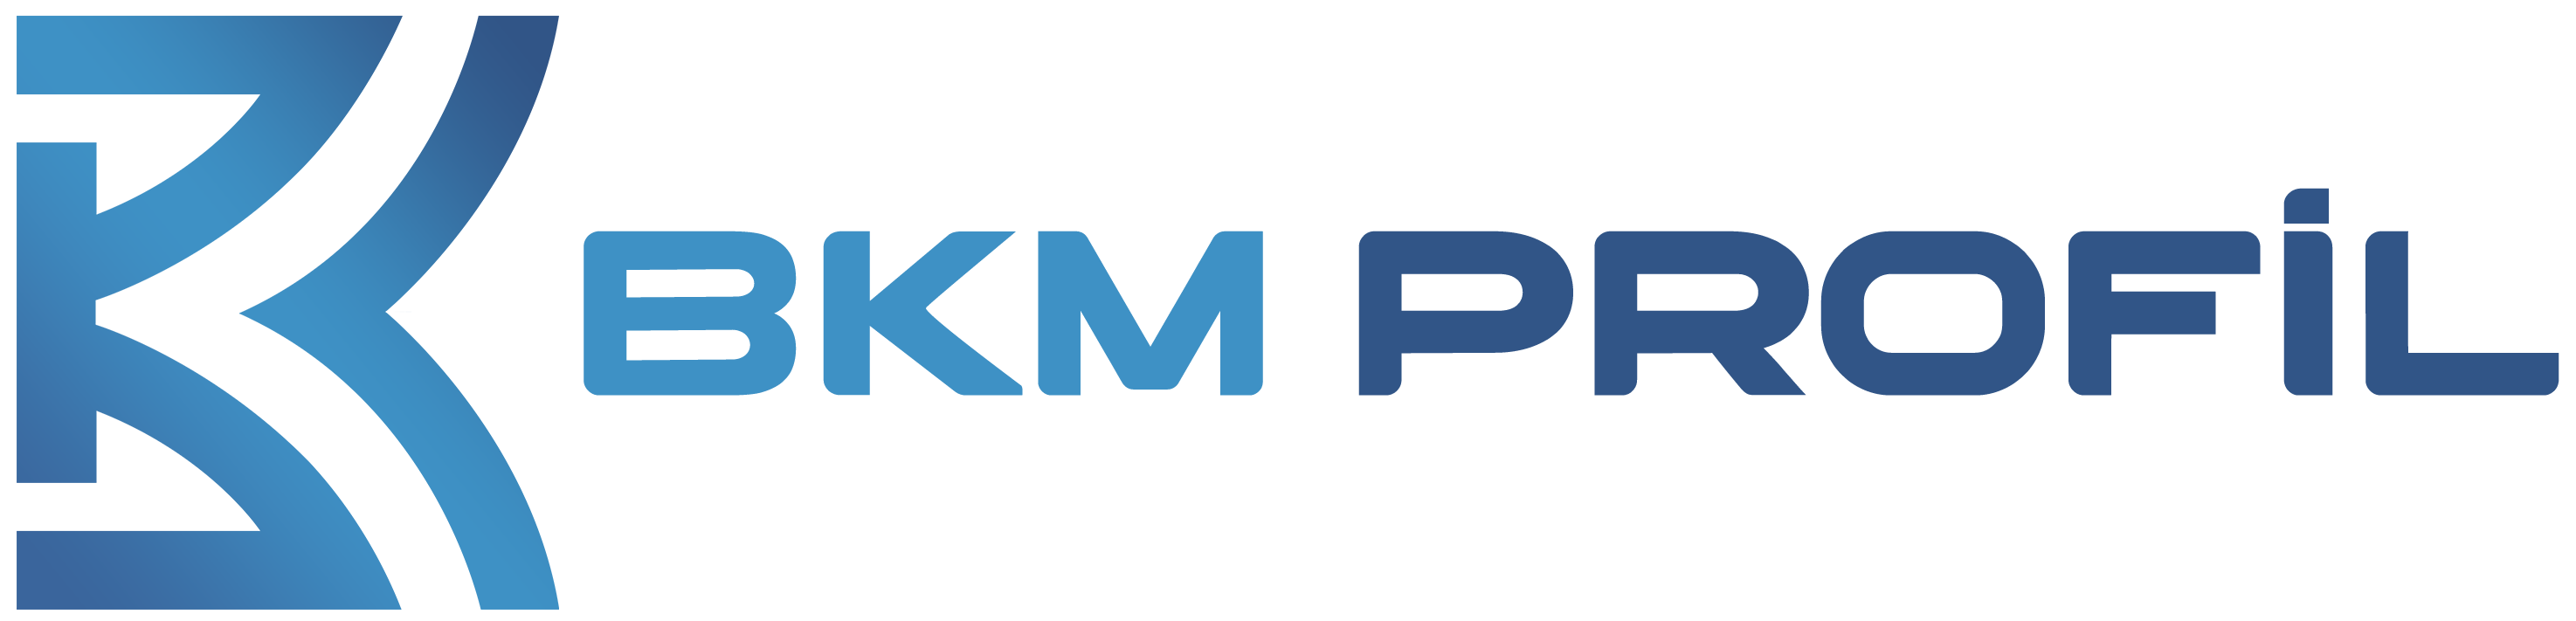 BKM Profiles